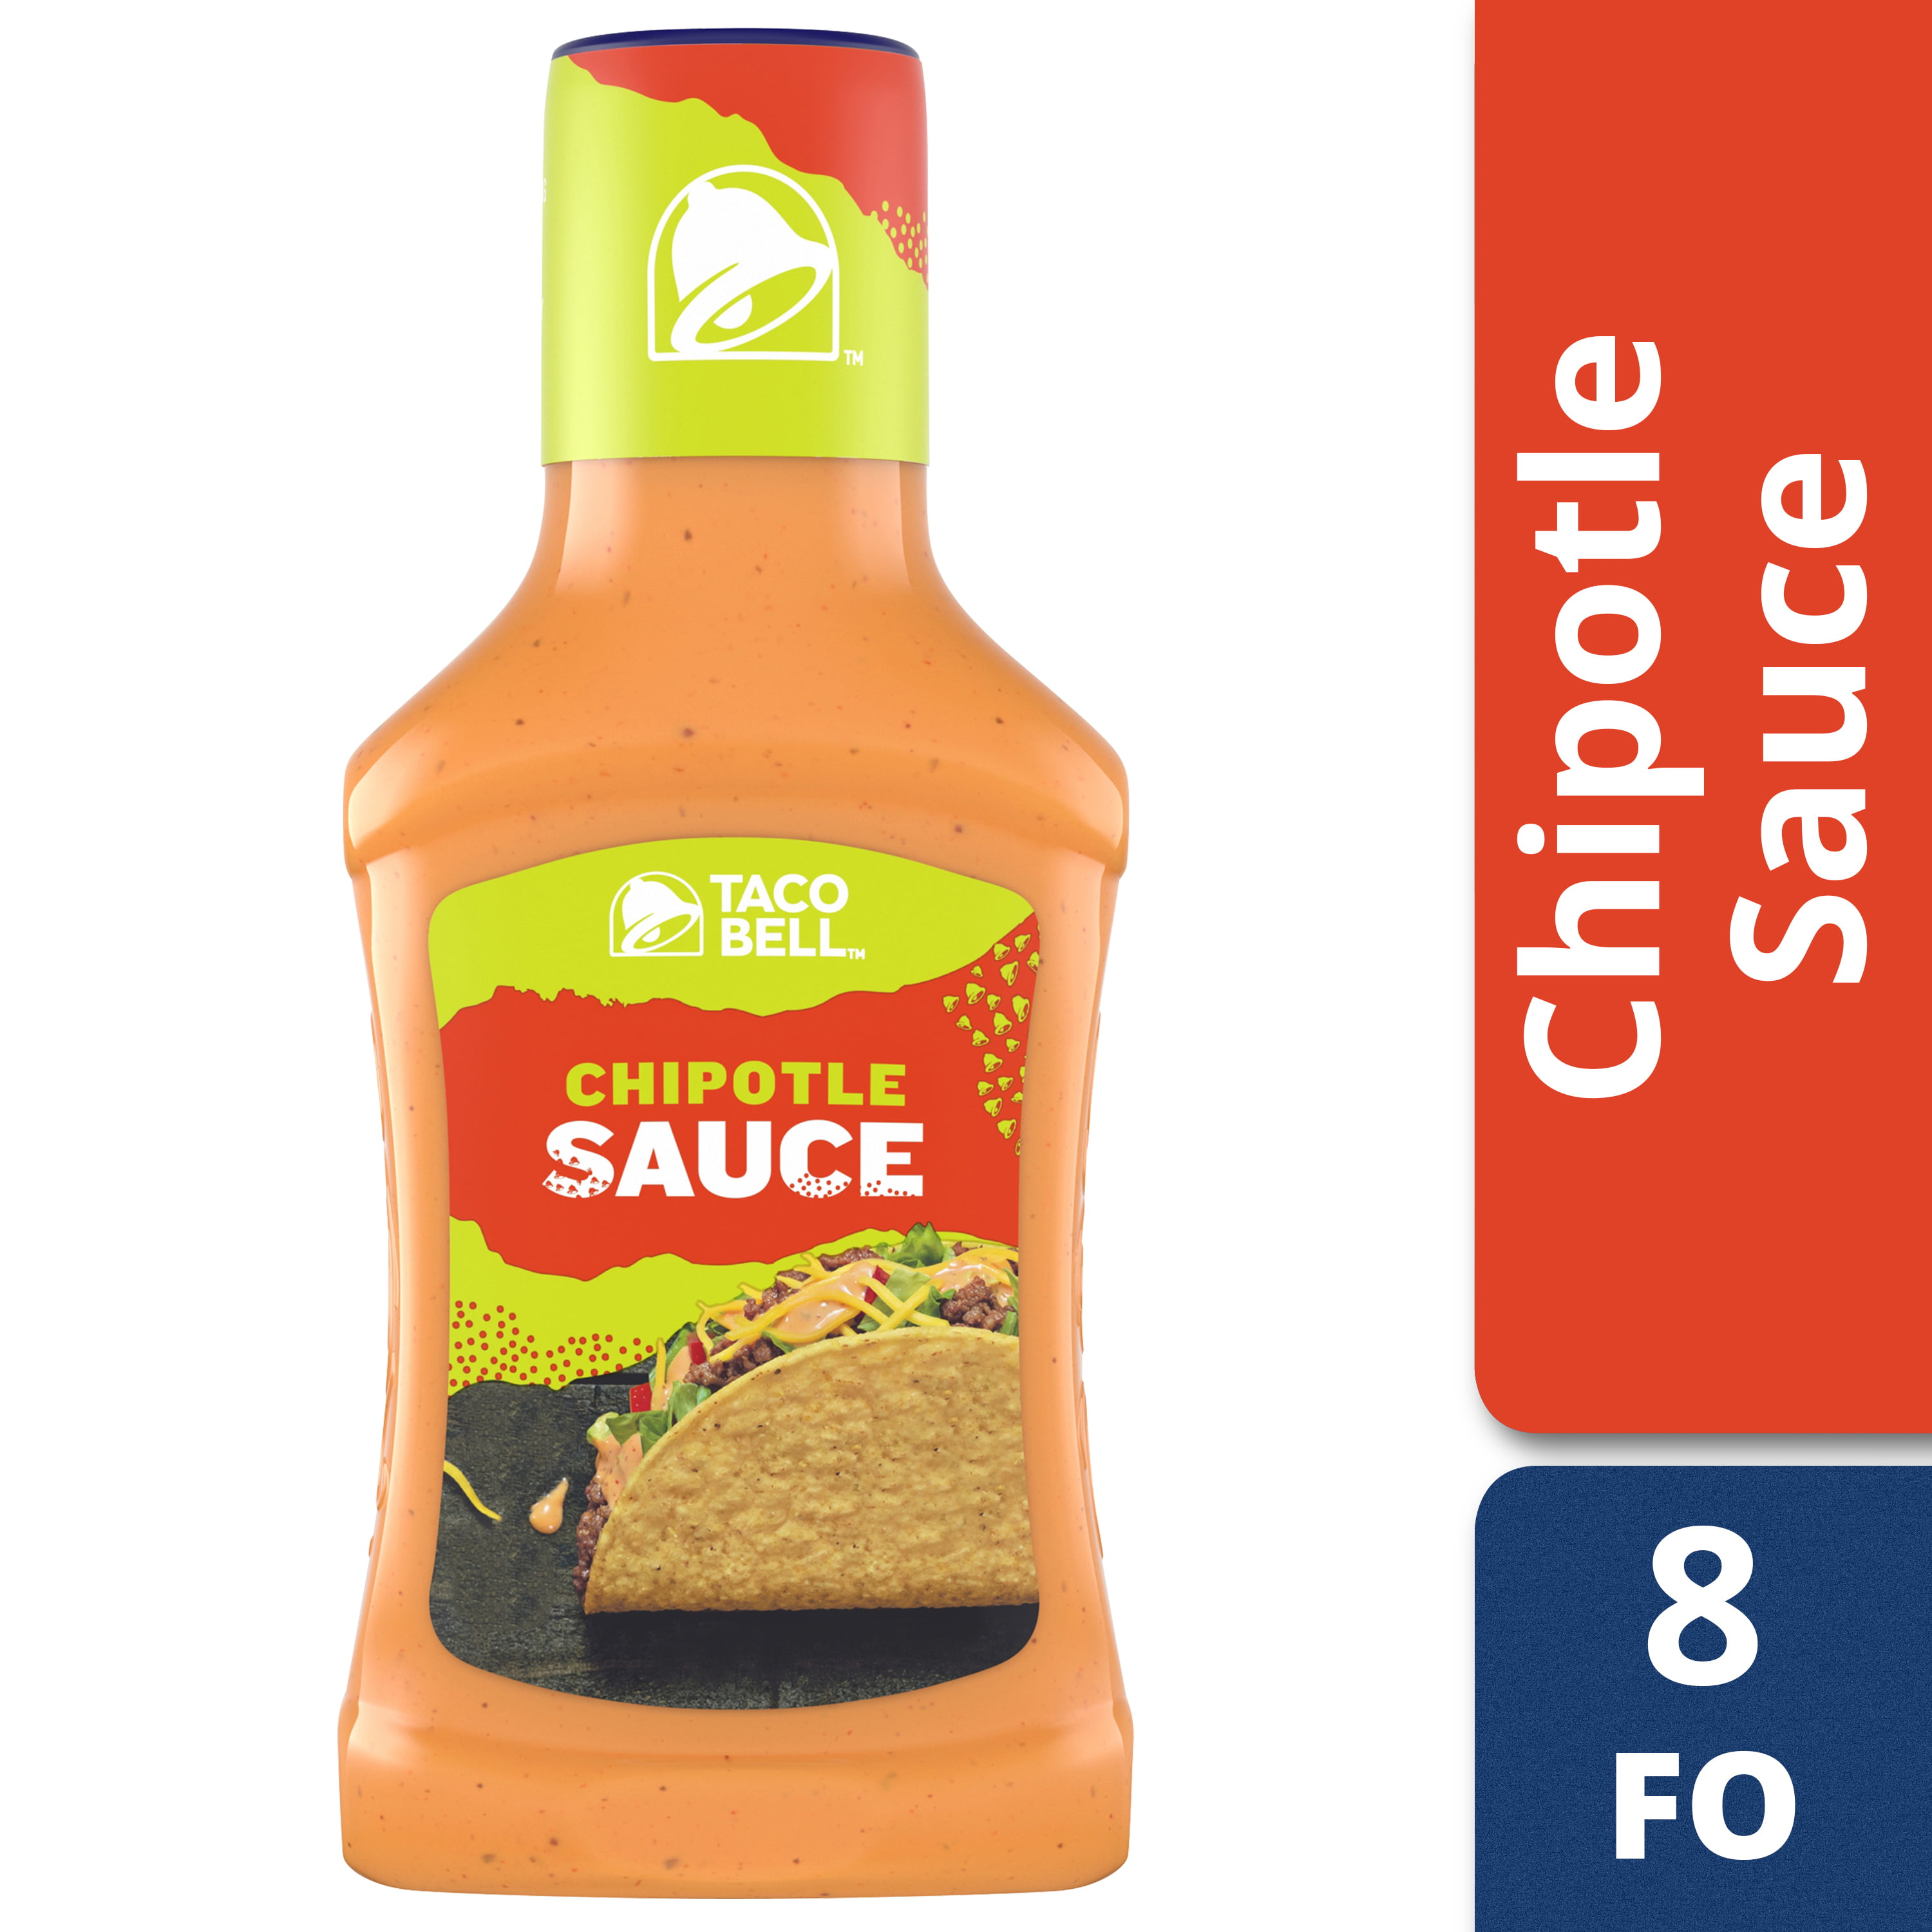 Taco Bell Chipotle Sauce 8 Fl Oz Bottle Walmart Com Walmart Com